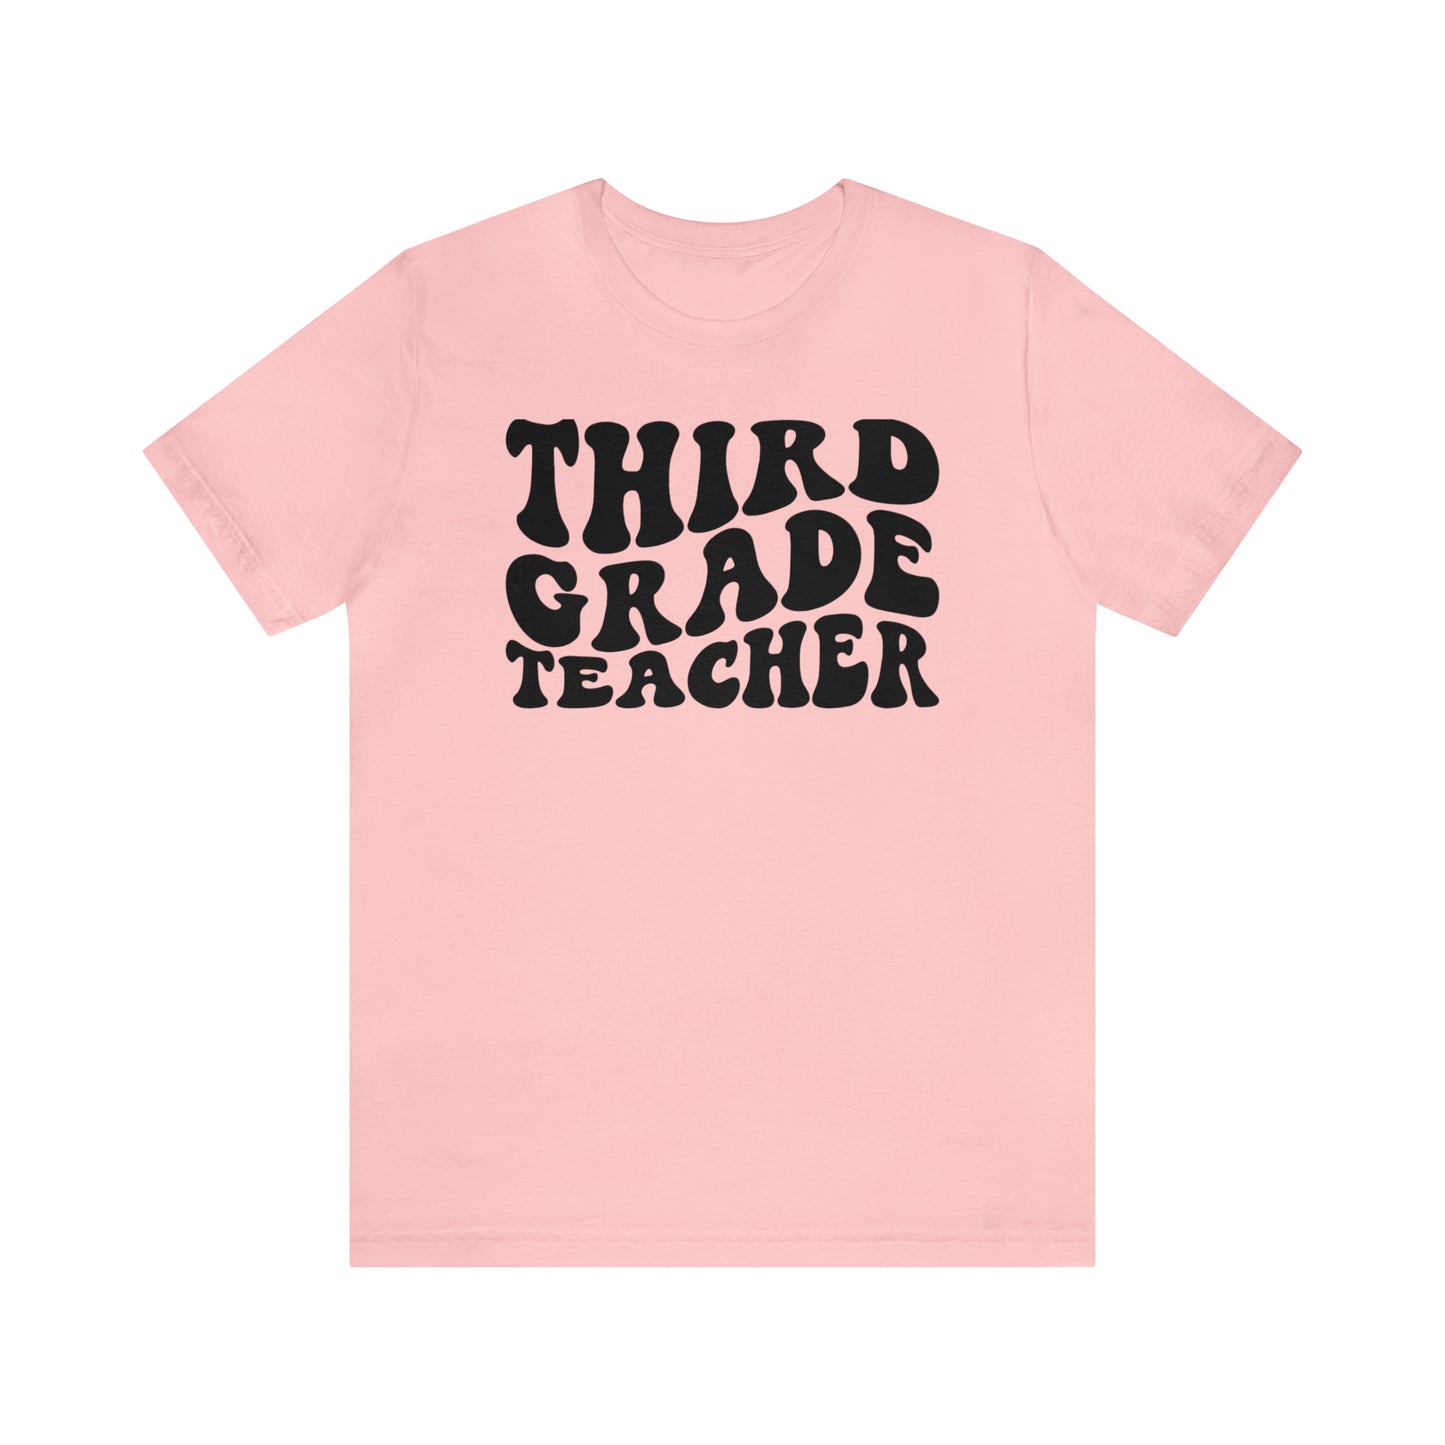 Black Groovy Retro "Third Grade Teacher" tee